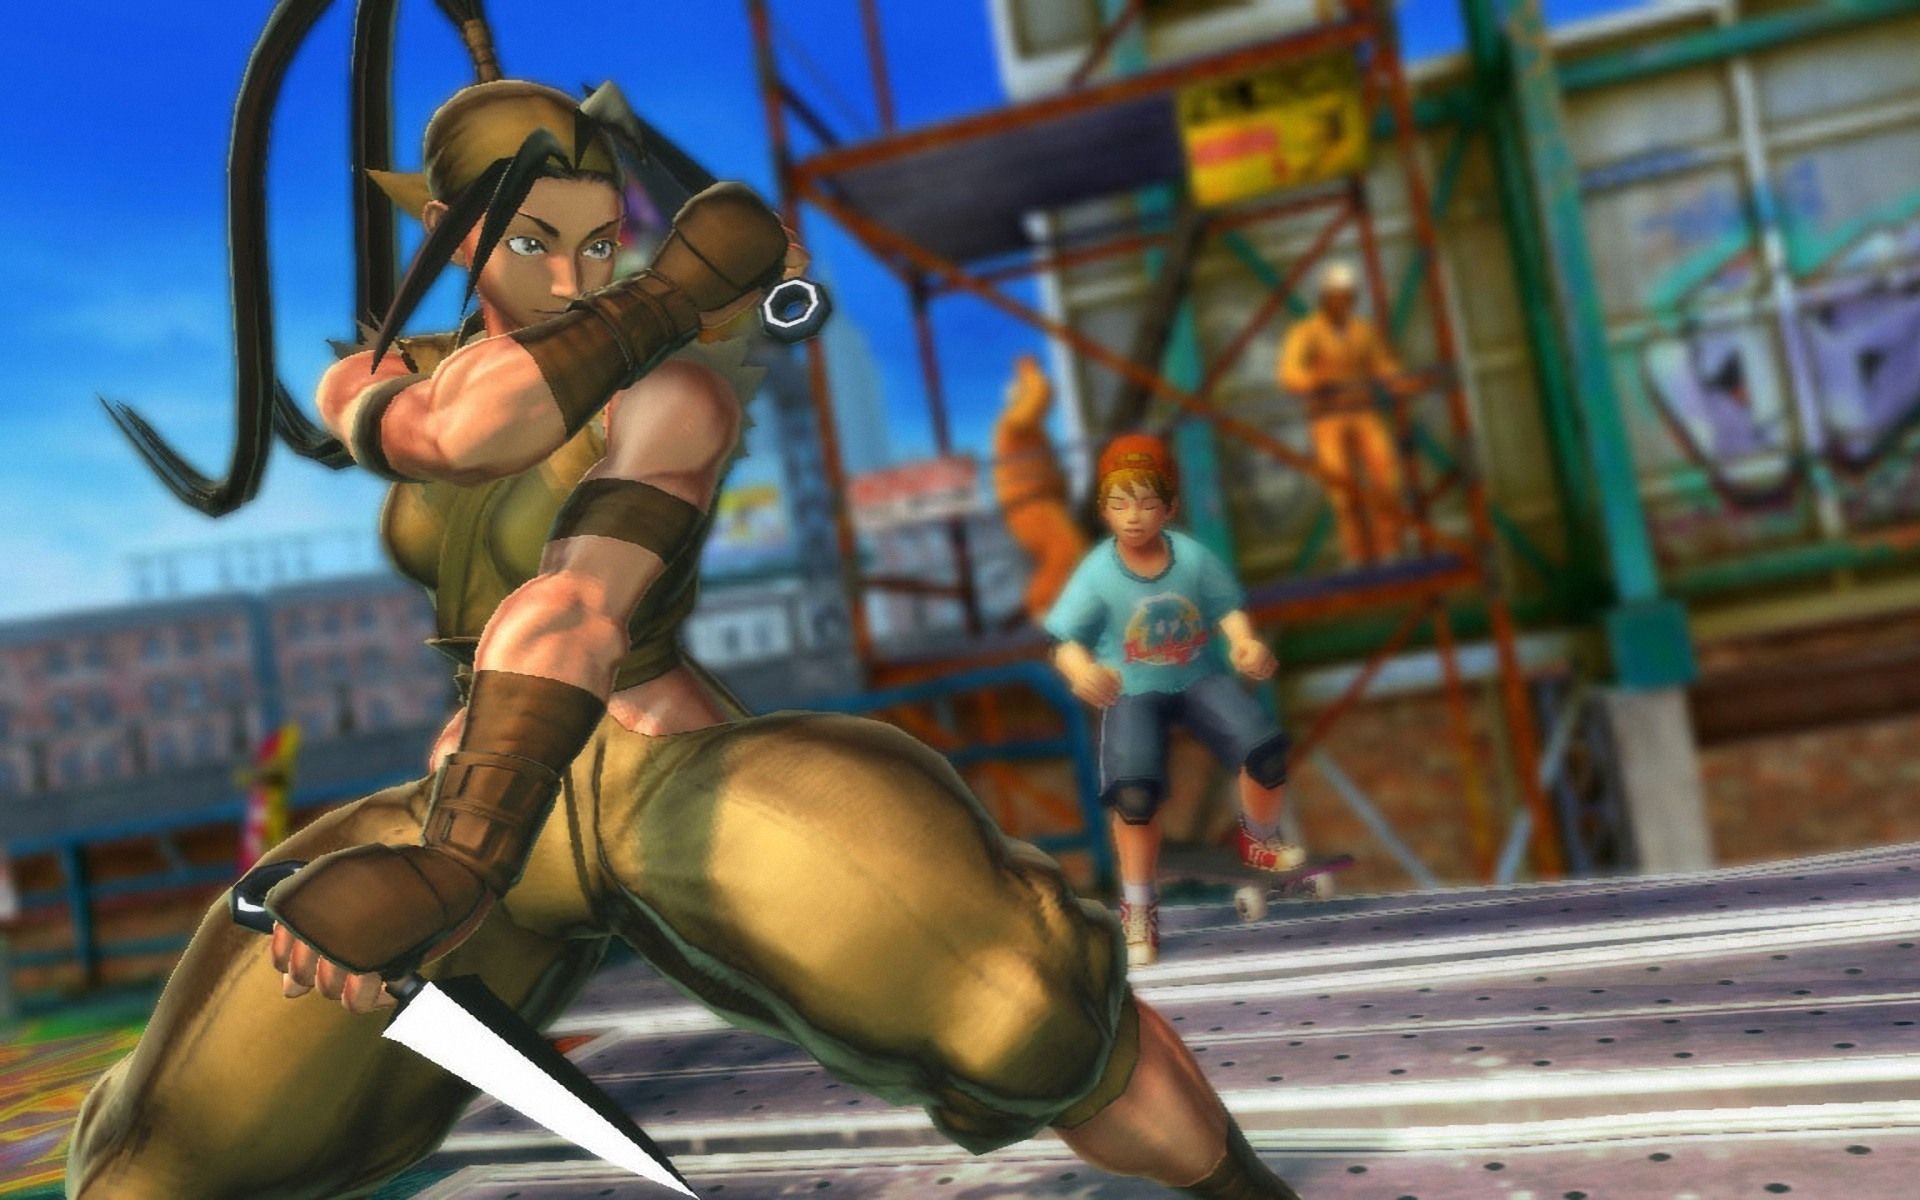 Illustration + digital enhancement Ryu Street Fighter IV, Street Fighter IV, Capcom